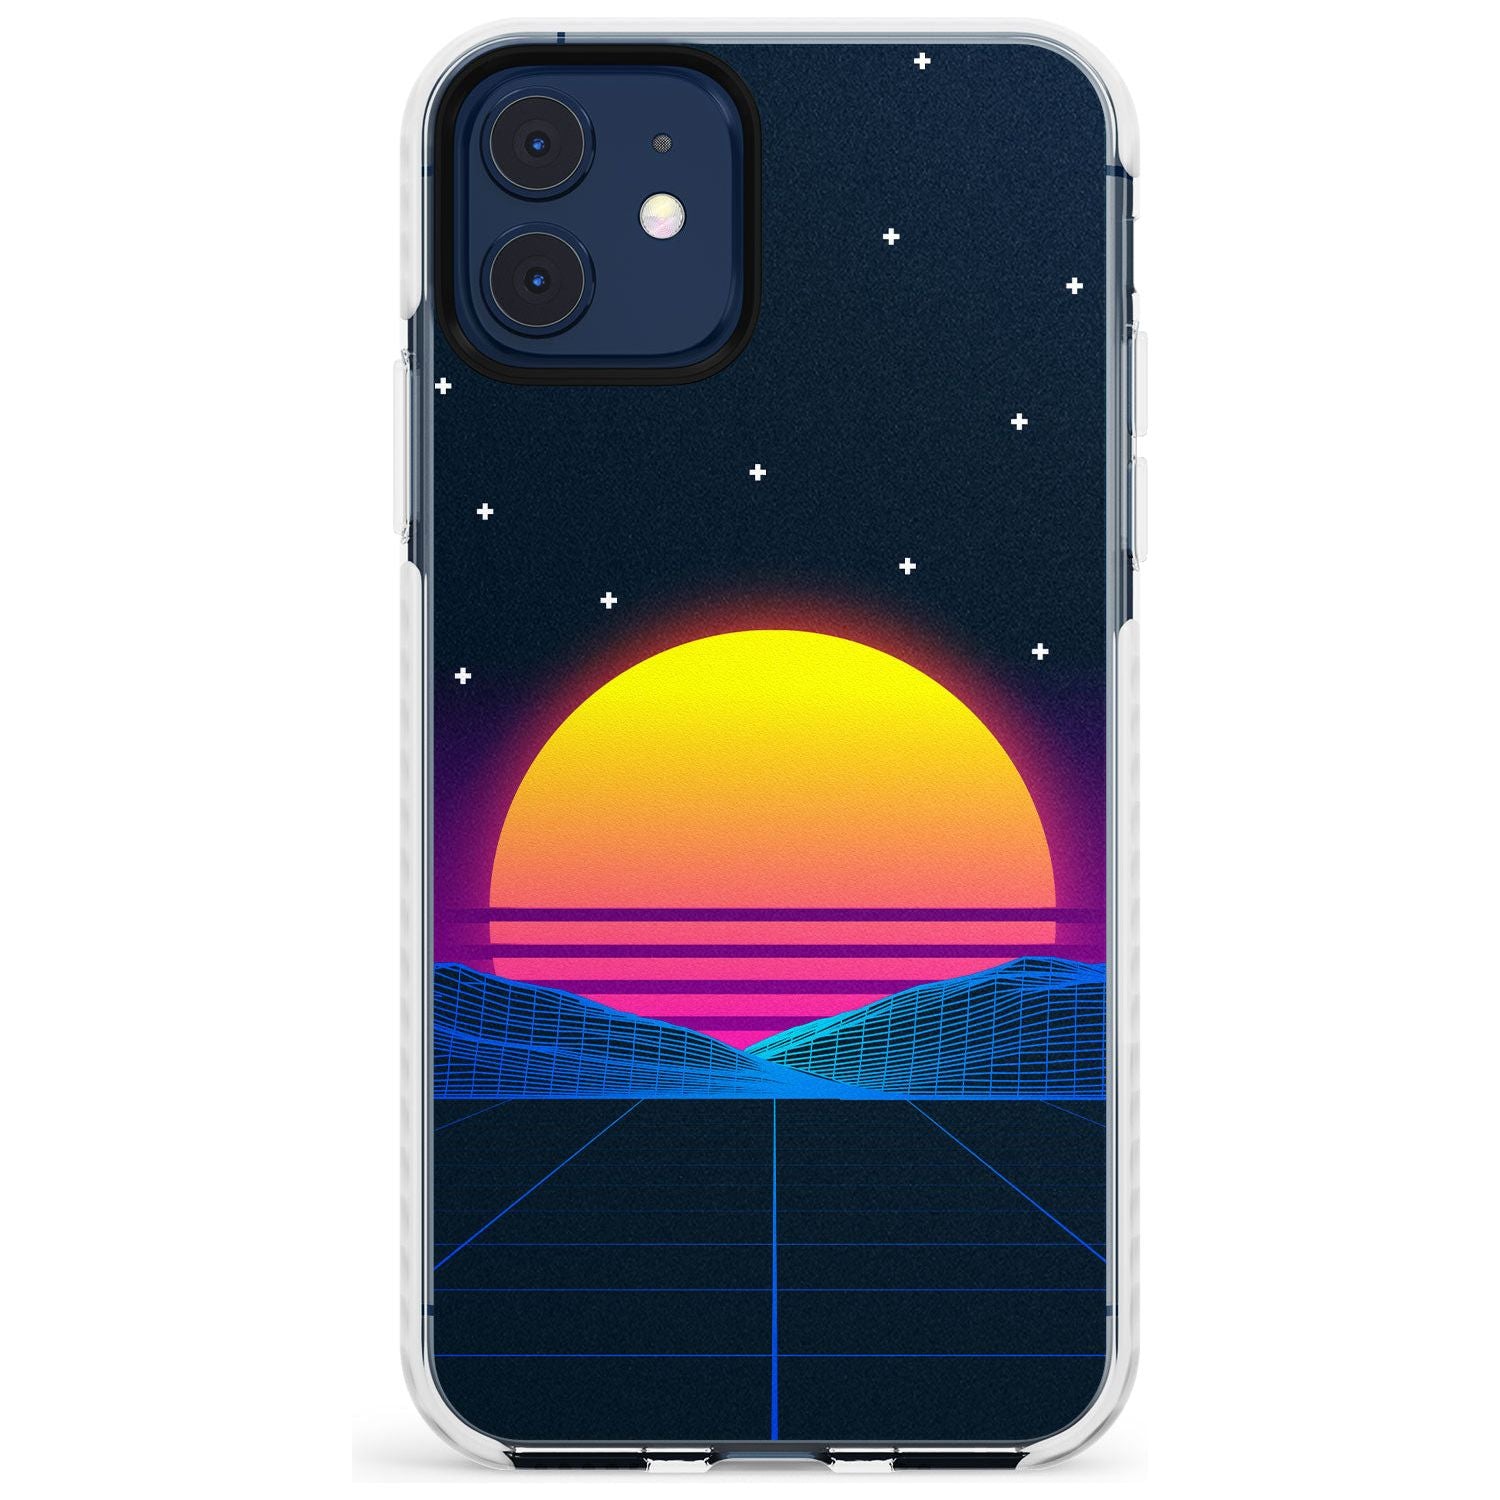 Retro Sunset Vaporwave Impact Phone Case for iPhone 11